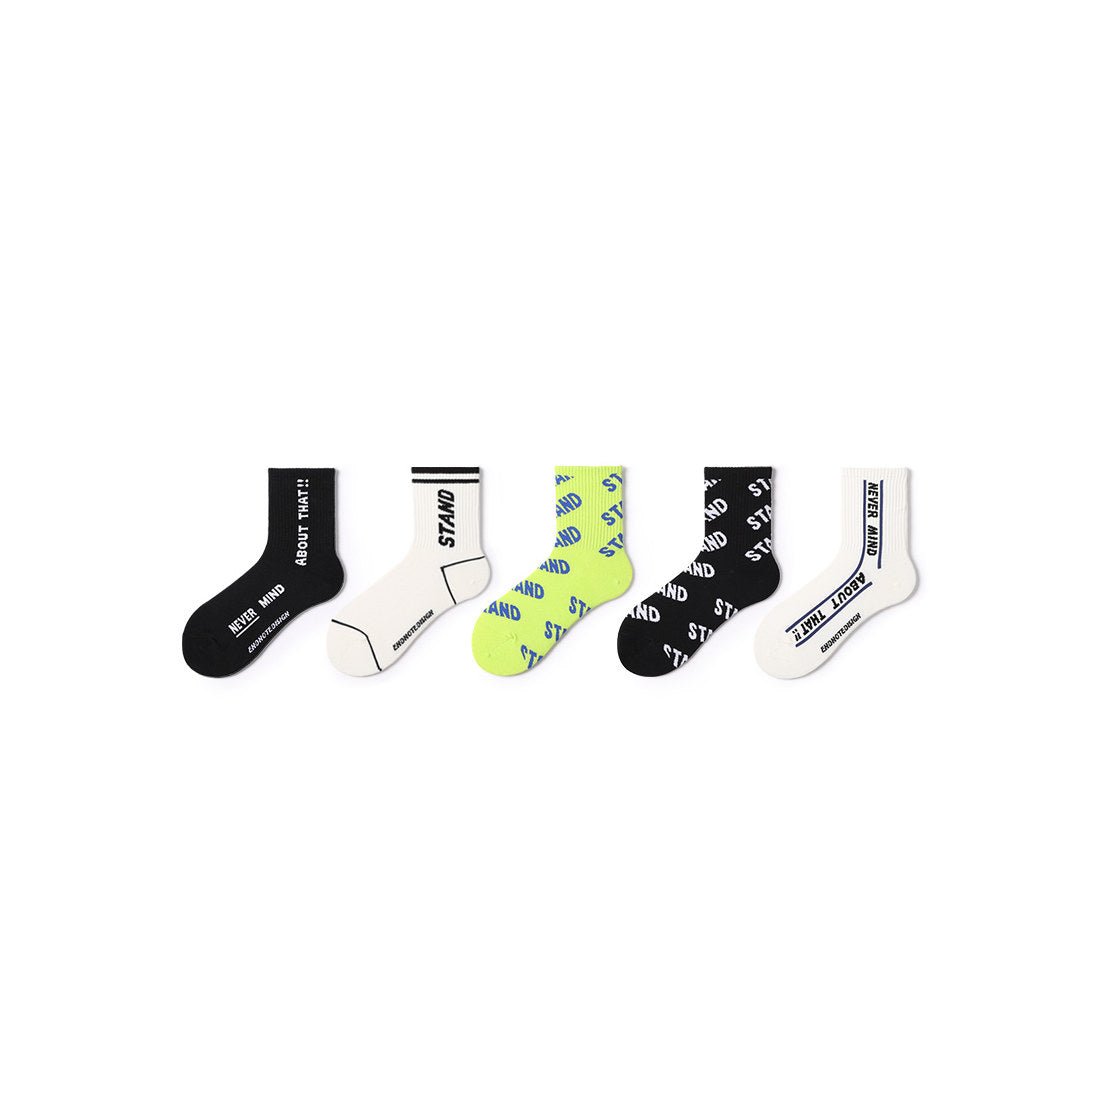 Never Mind All-season Unisex 5pcs Crew Socks Set - 0cm